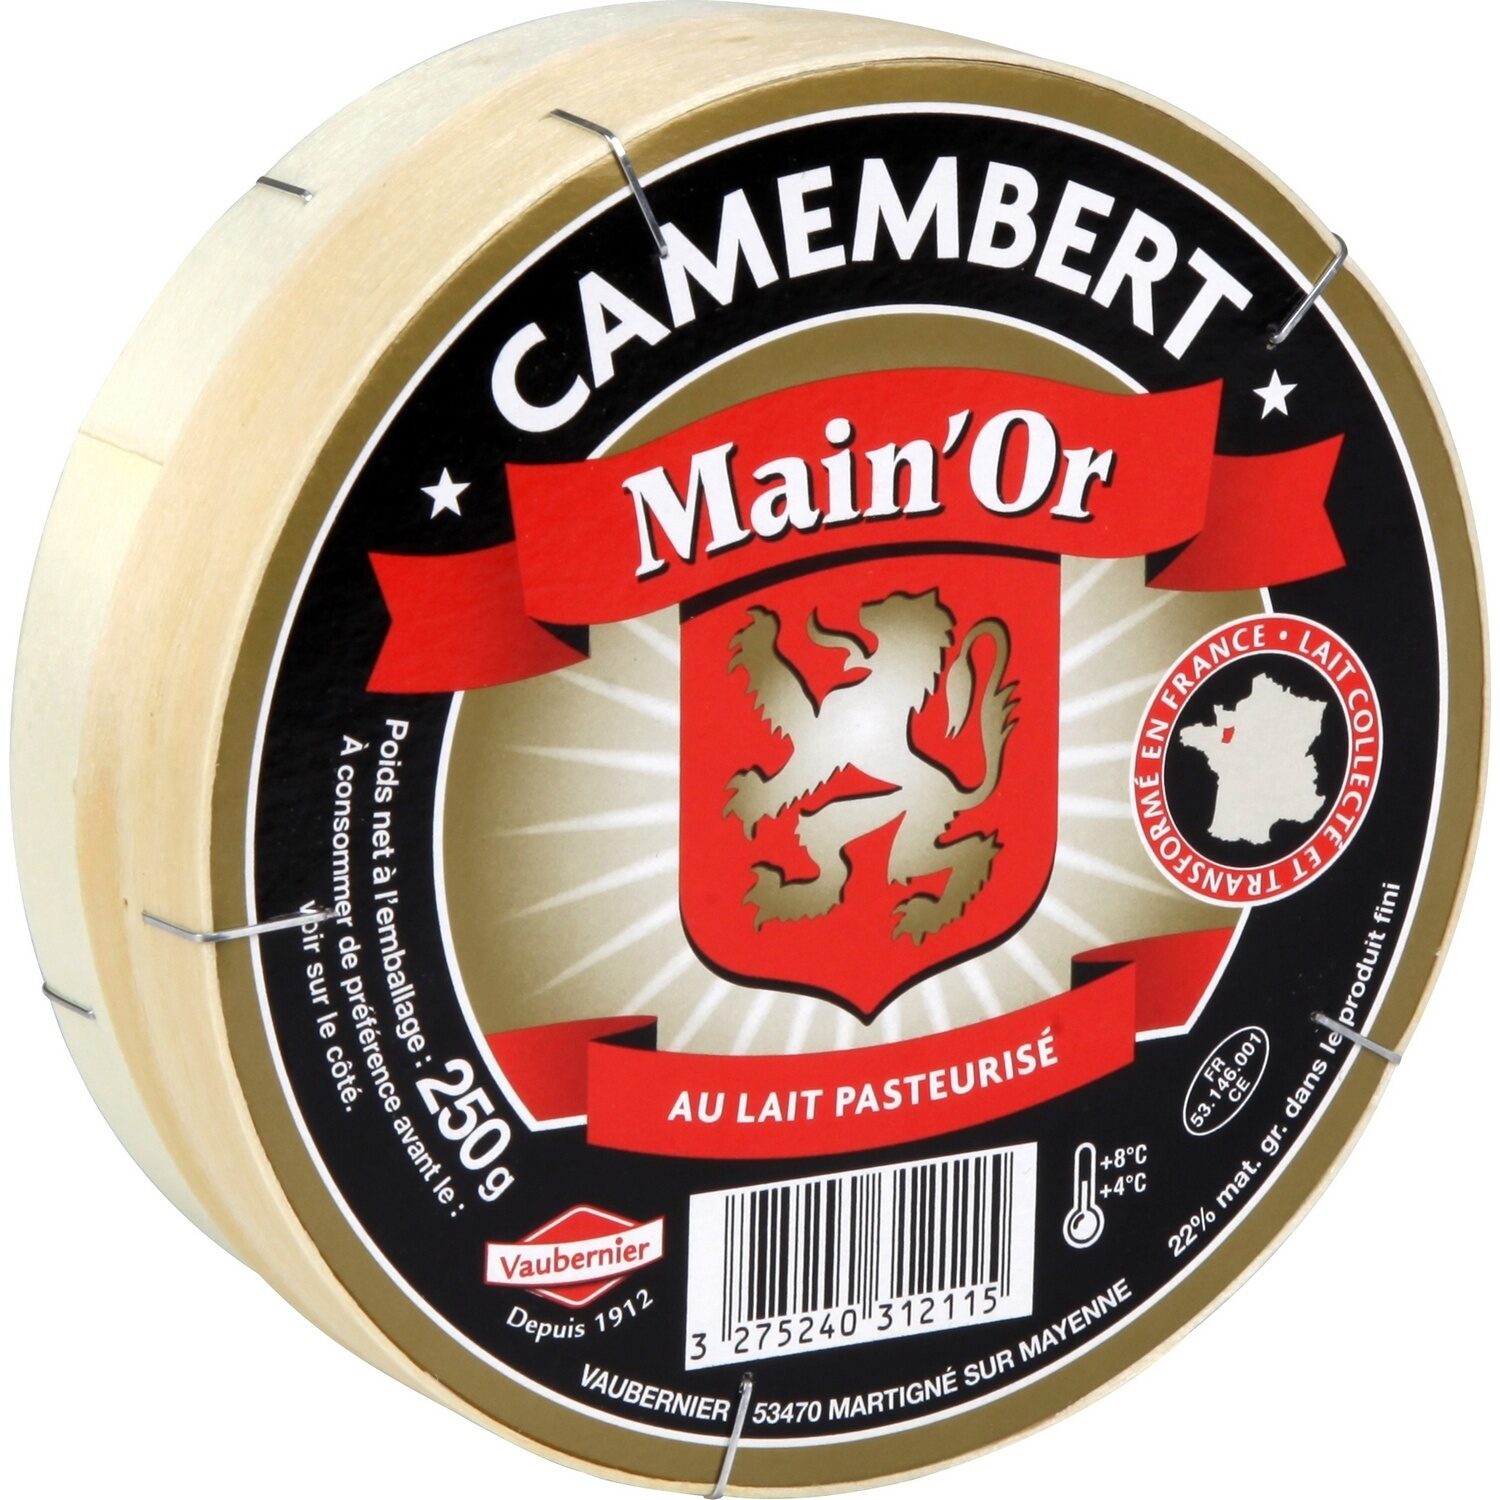 Camembert - نتاج - fr